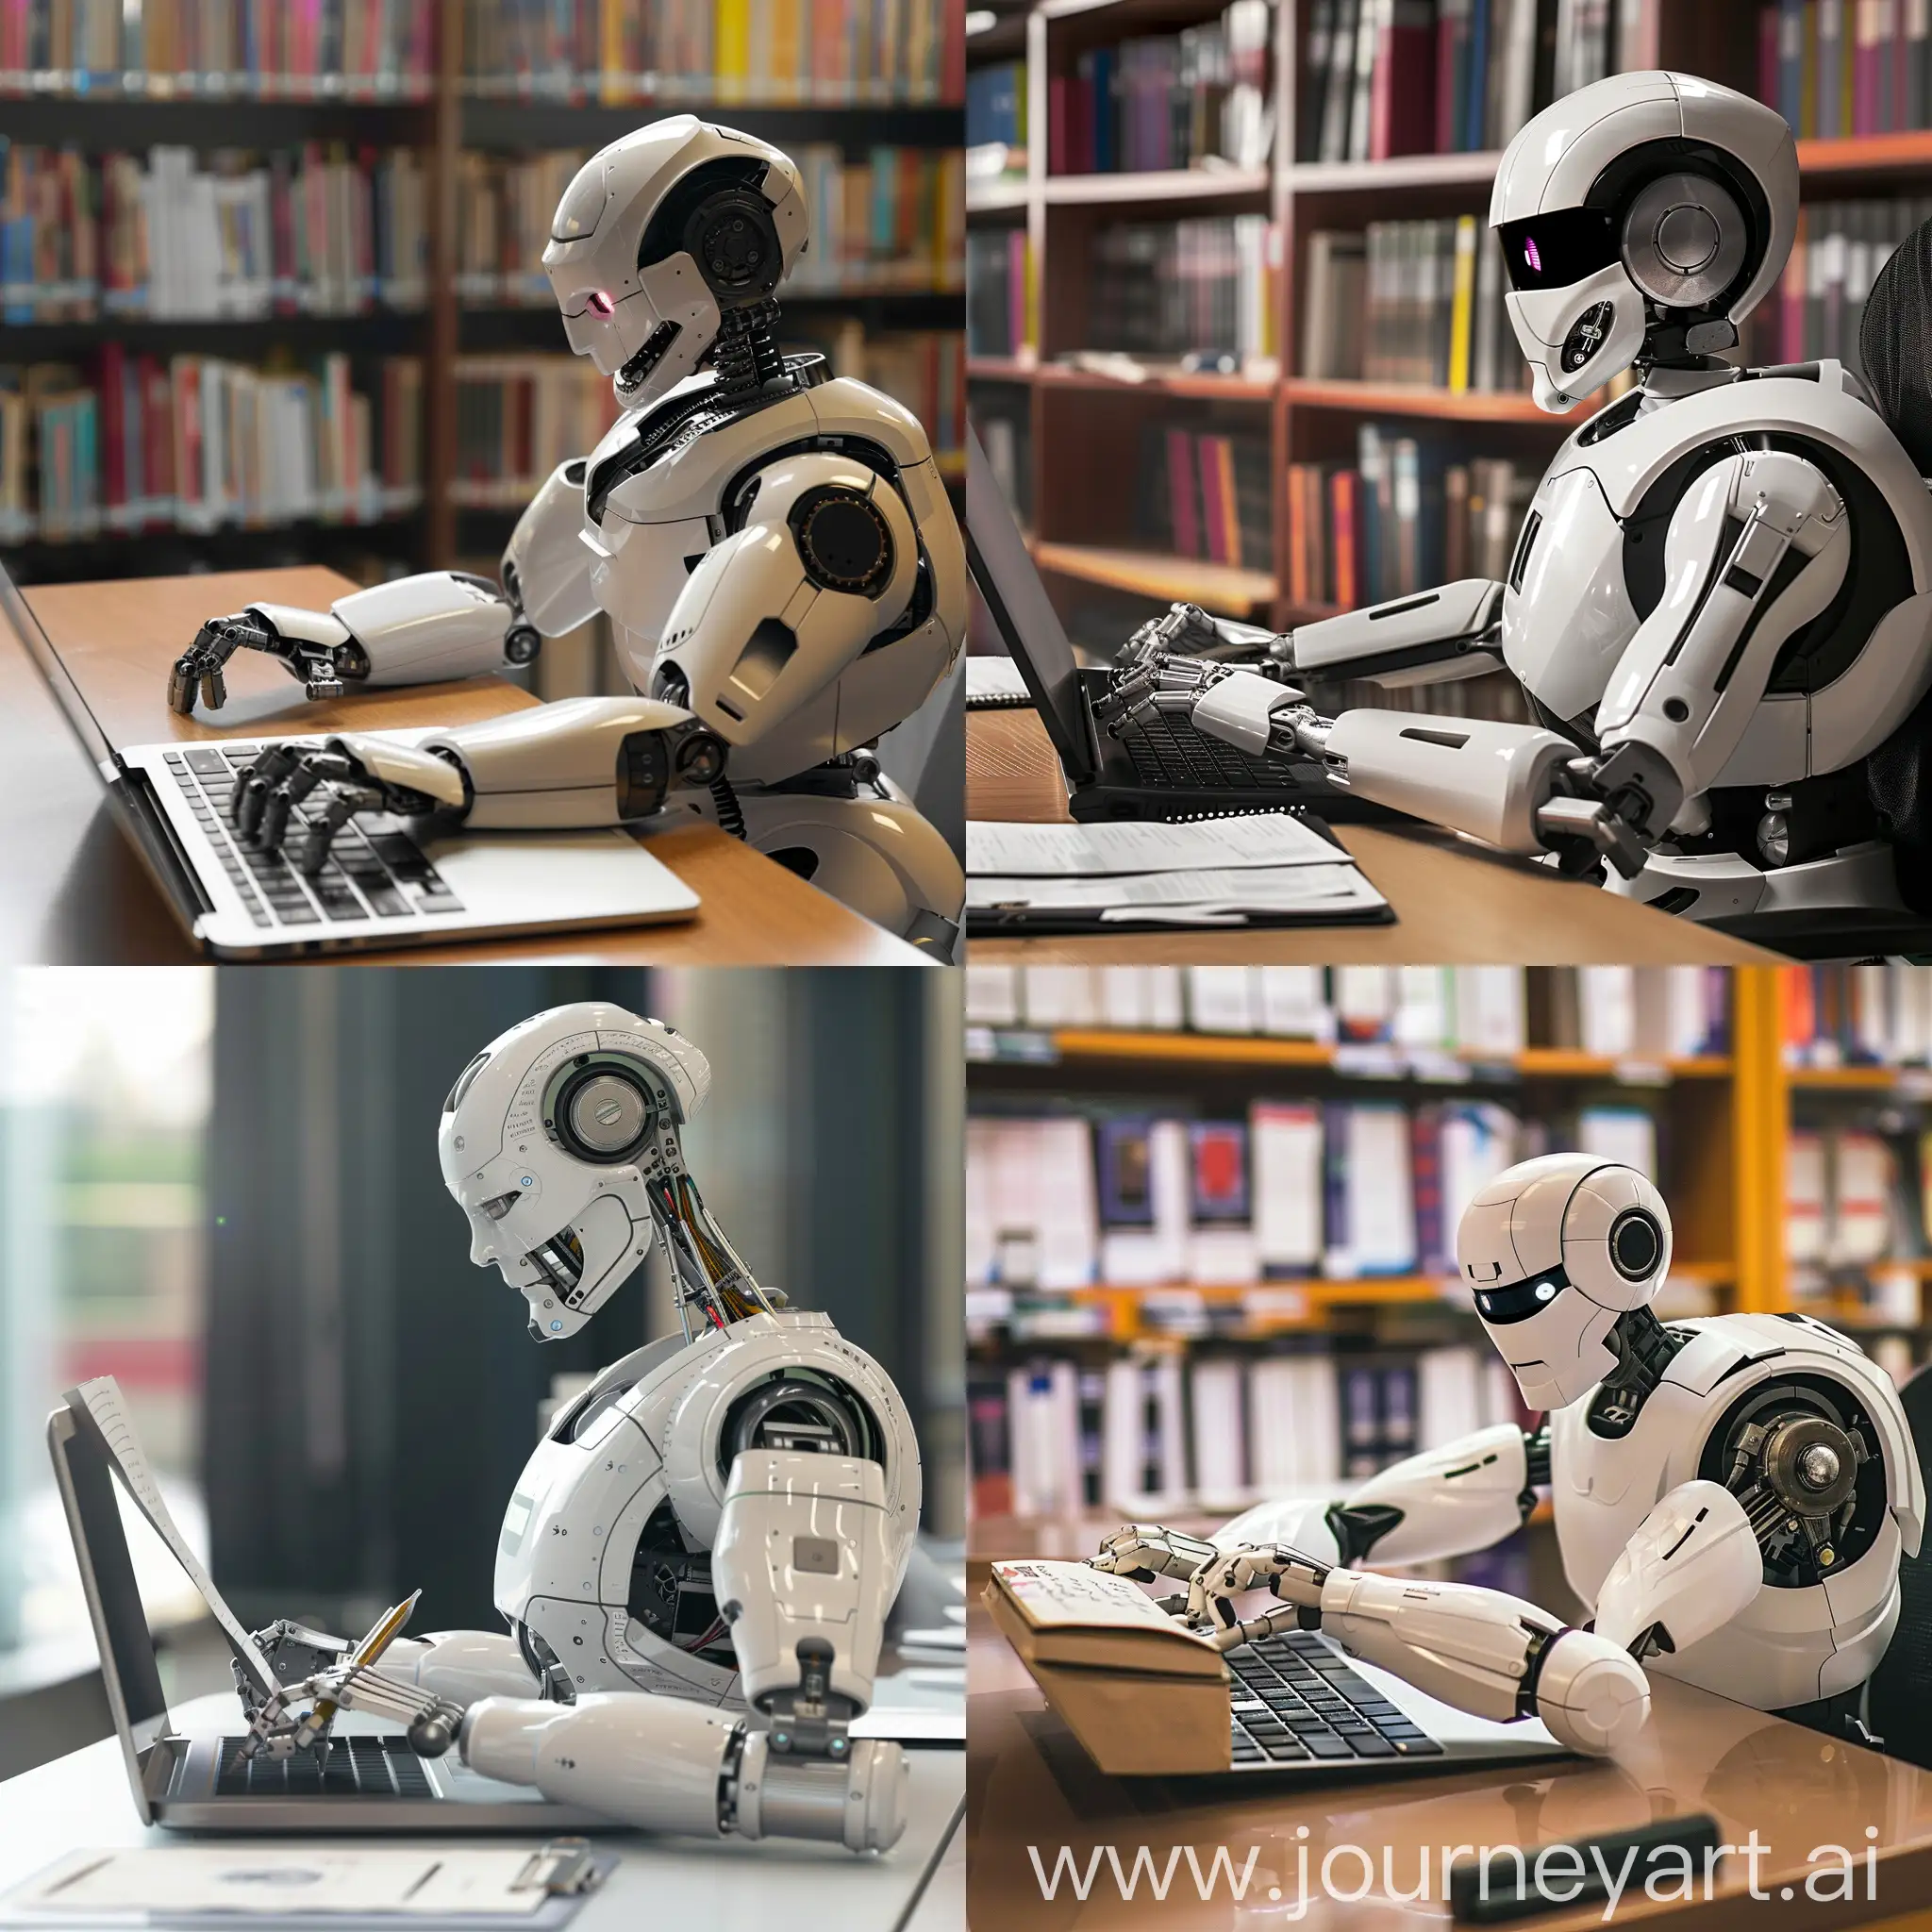 A robot typing a university assignment